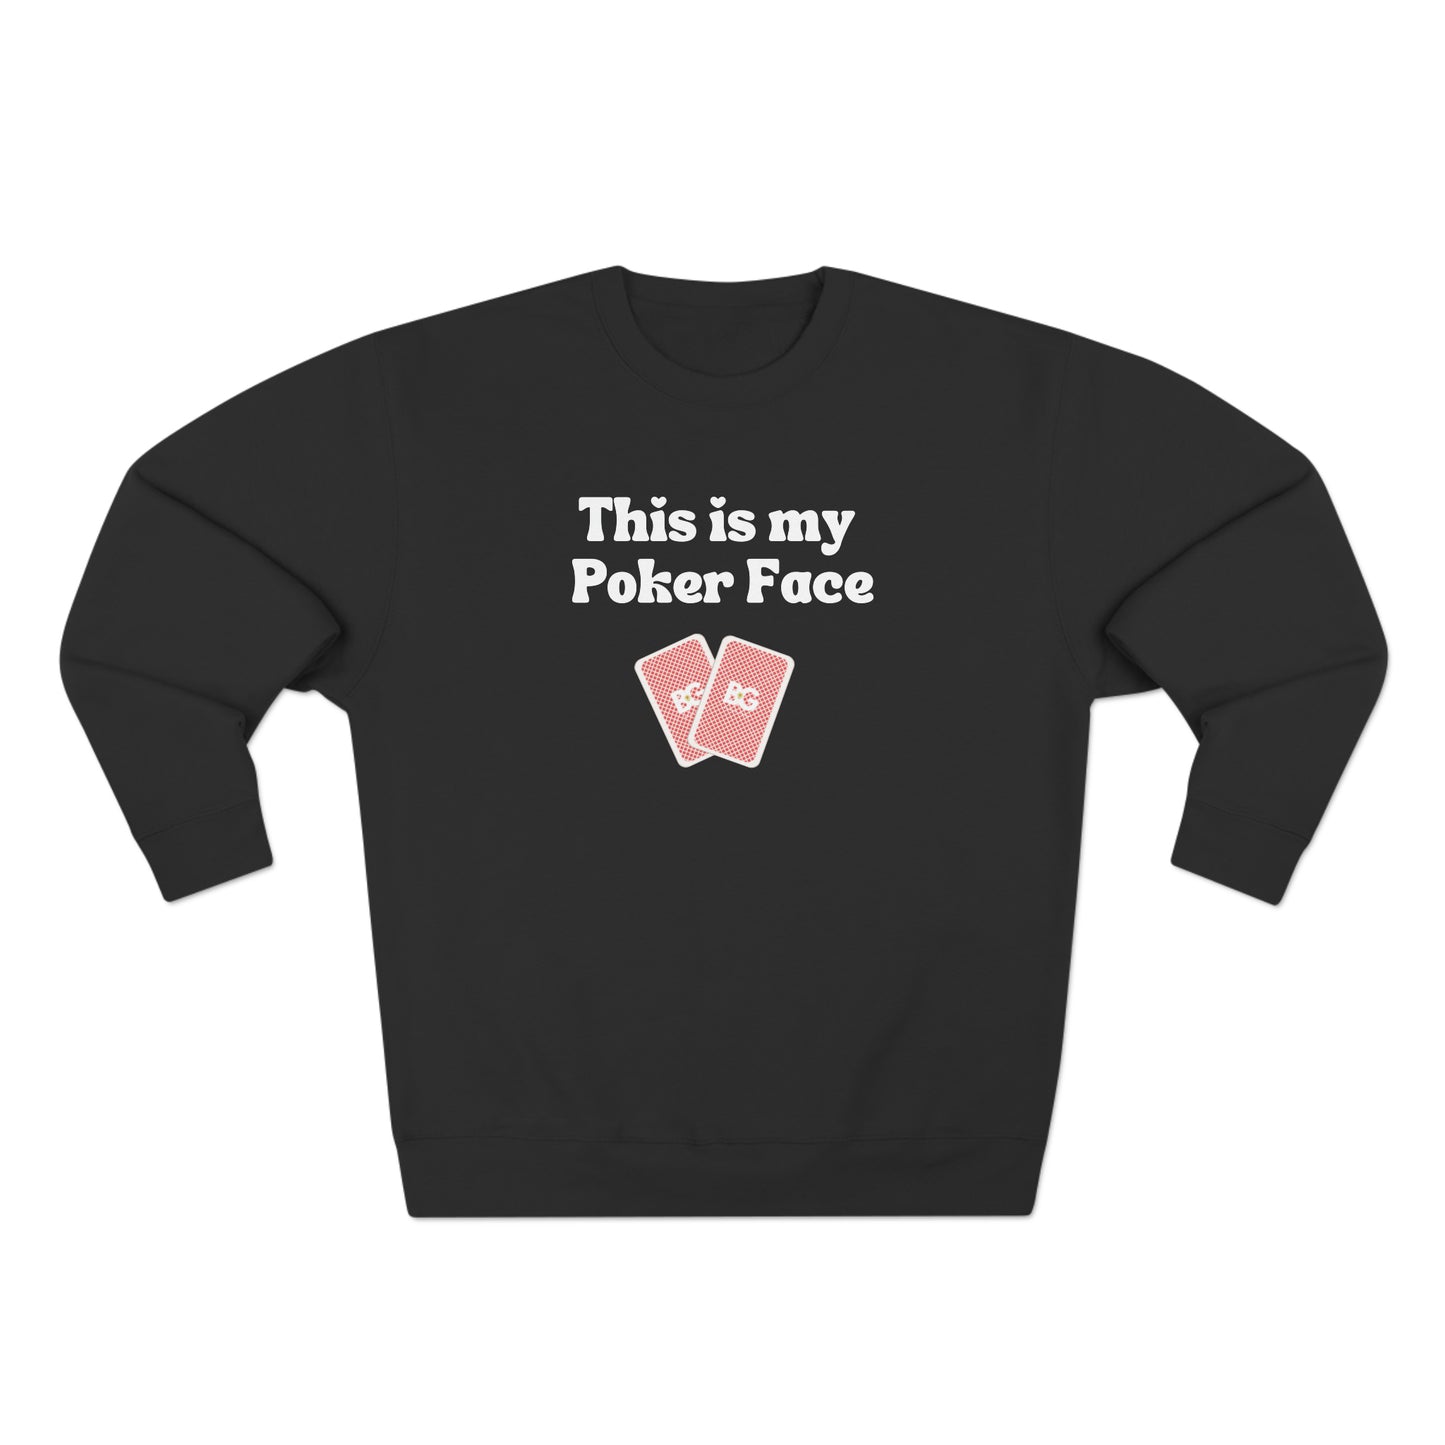 BG "This is my Poker Face" Premium Crewneck Sweatshirt